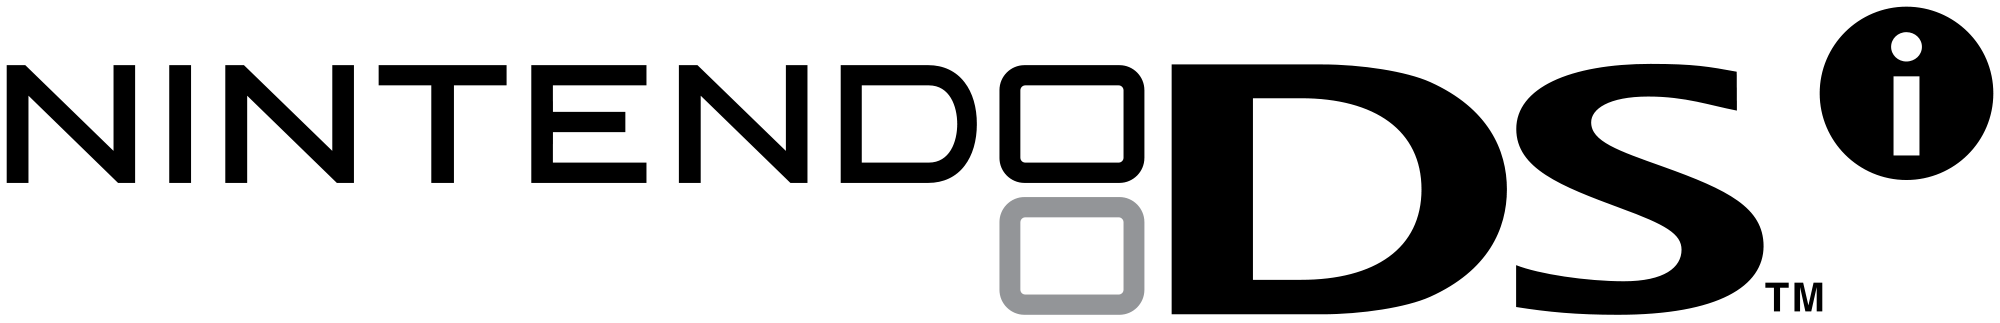 Nintendo DS Logo - Nintendo DSi logo.svg